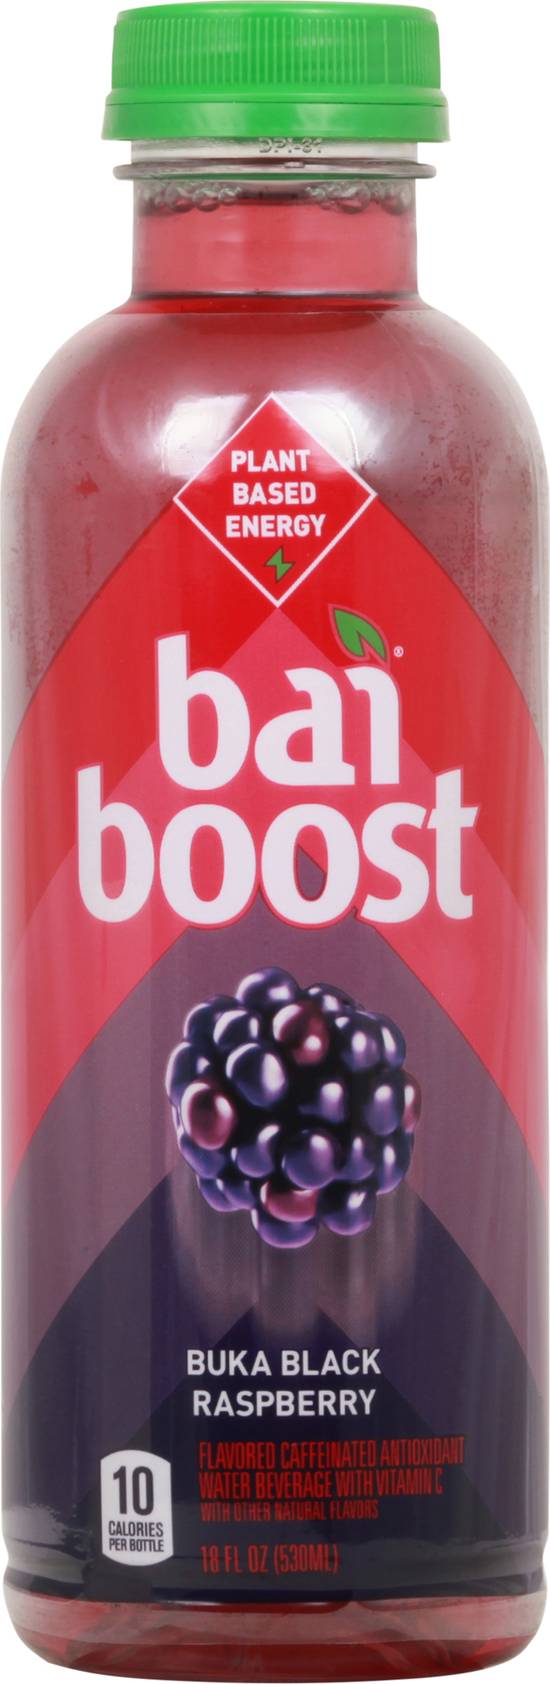 Bai Boost Buka Black Raspberry Water (18 fl oz)